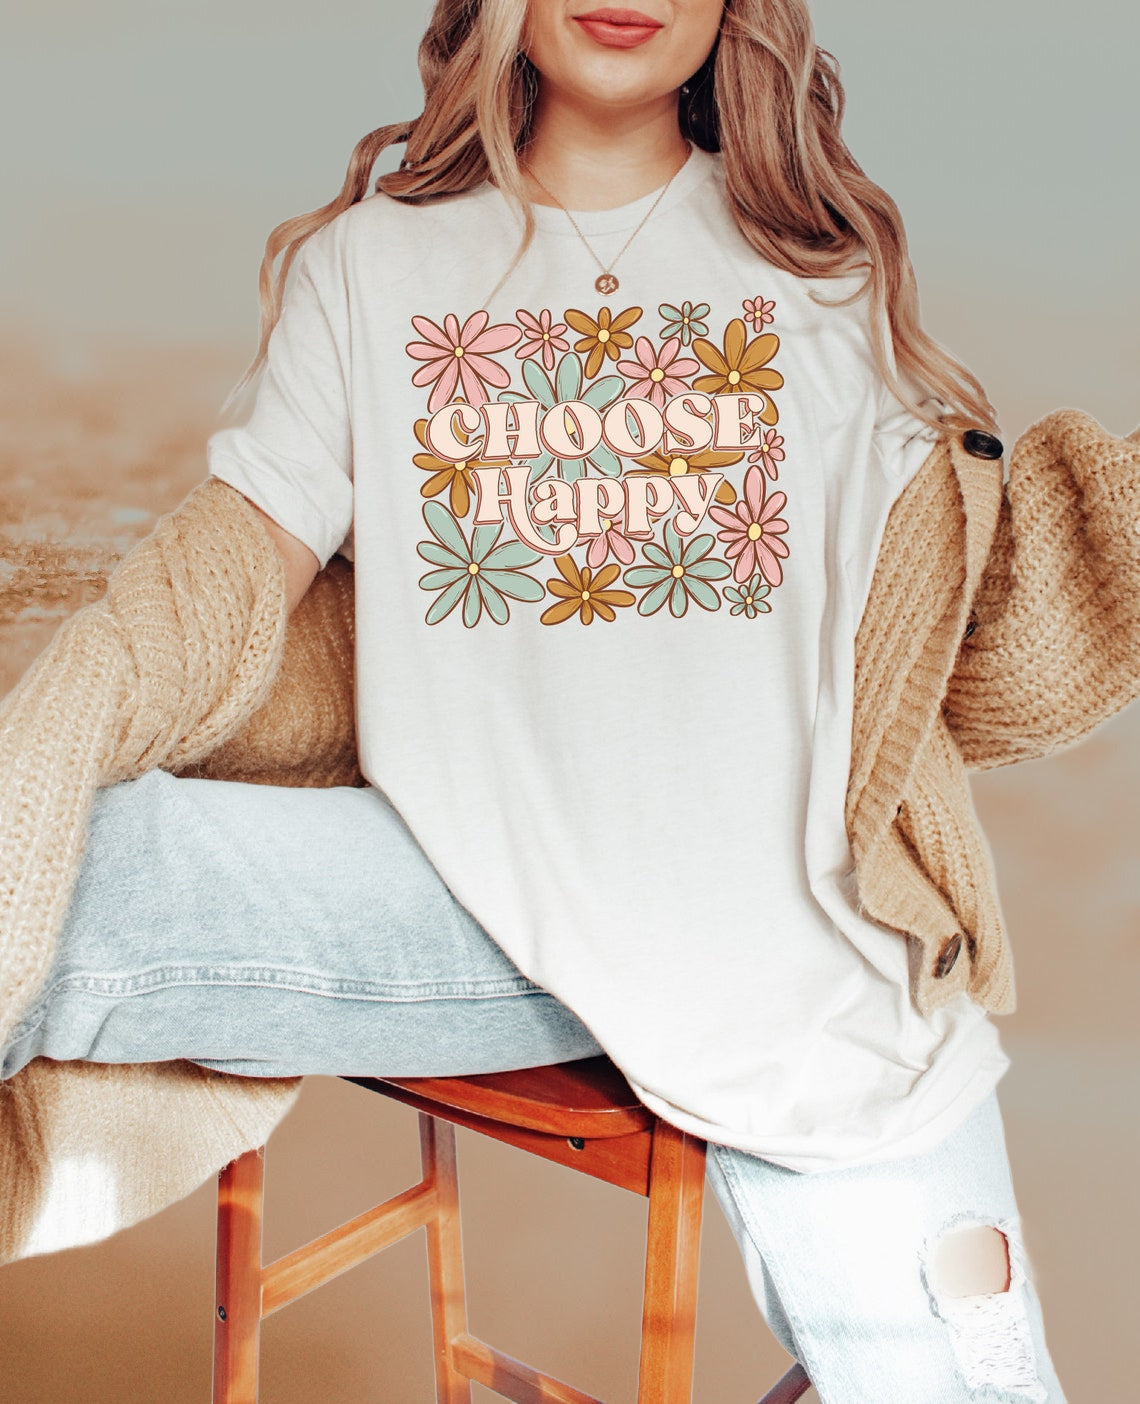 T-Shirt or Sweatshirt Spring Summer Choose Happy  Flowers #2